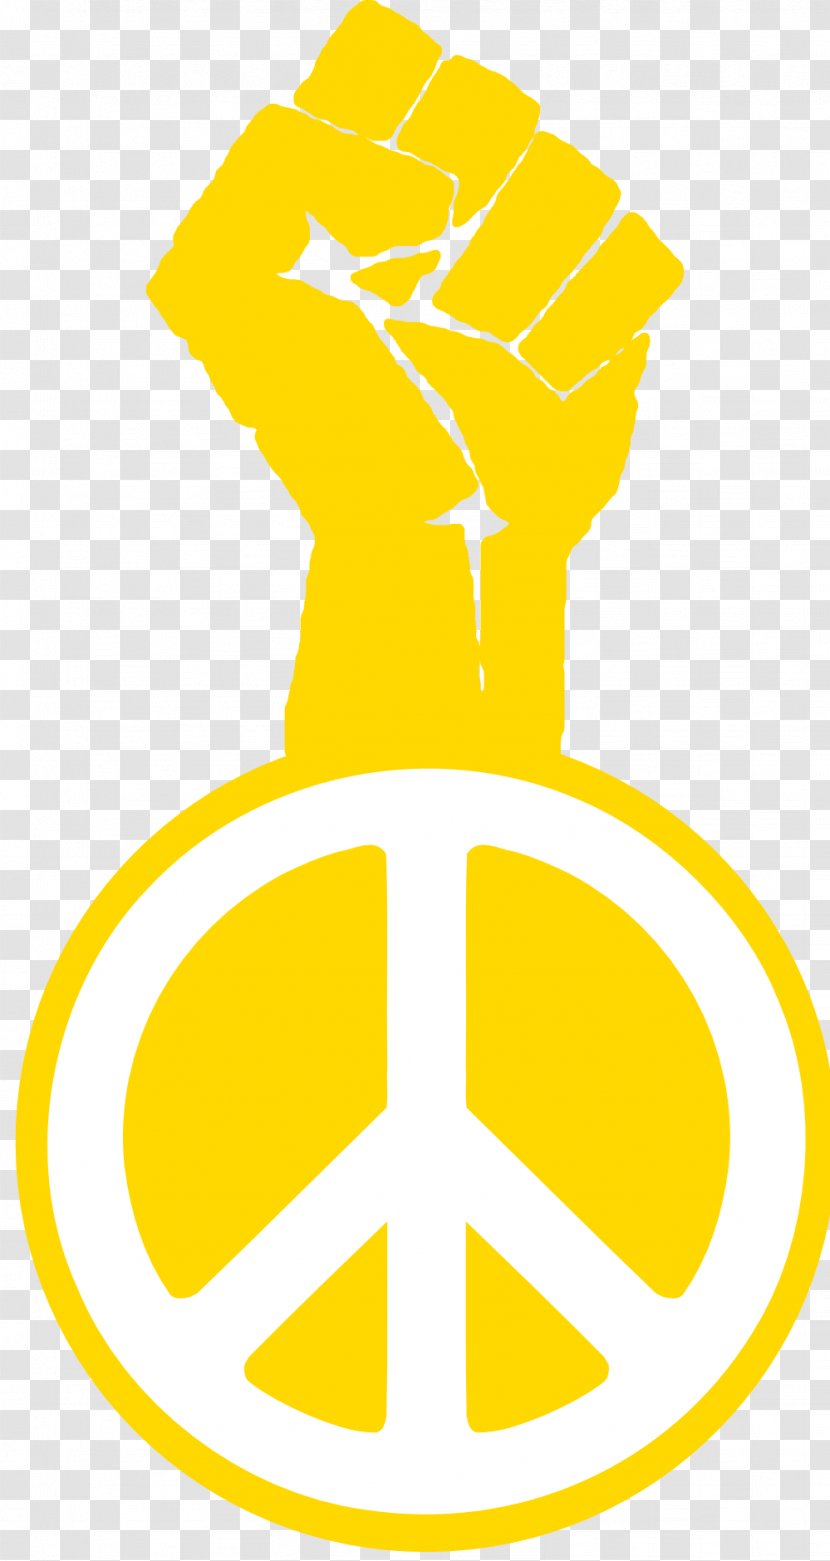 Raised Fist Peace Symbols Clip Art - Symbol Transparent PNG